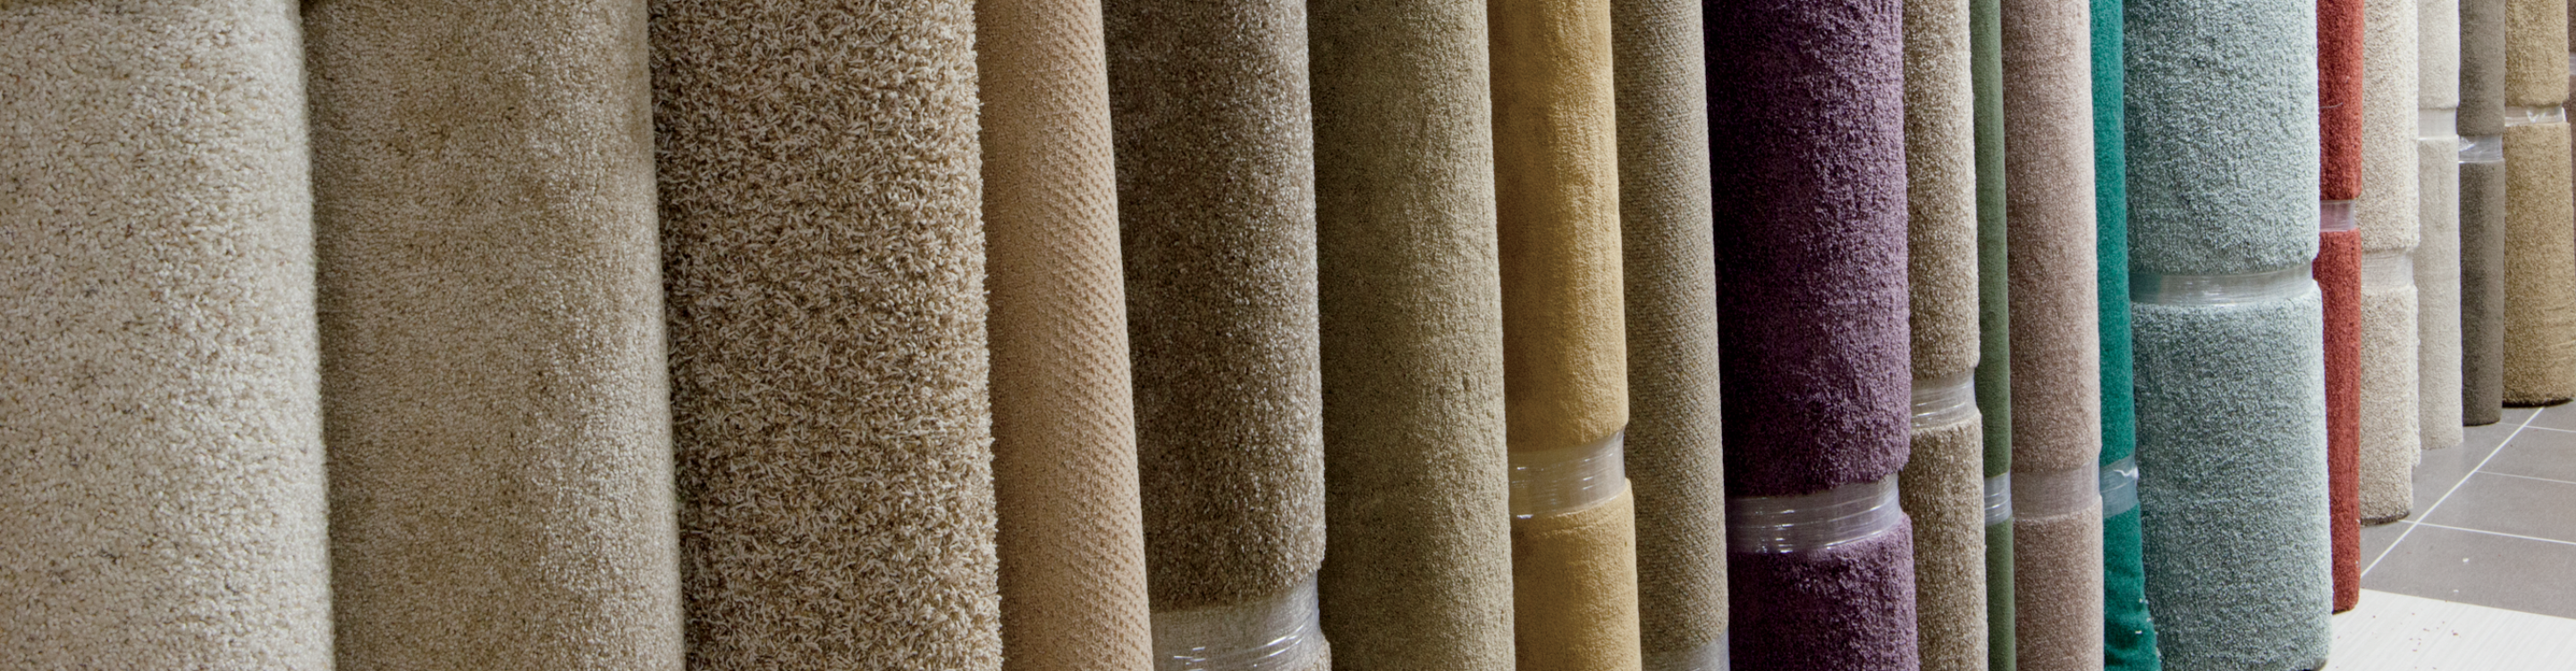 rolls of different color carpet remnants